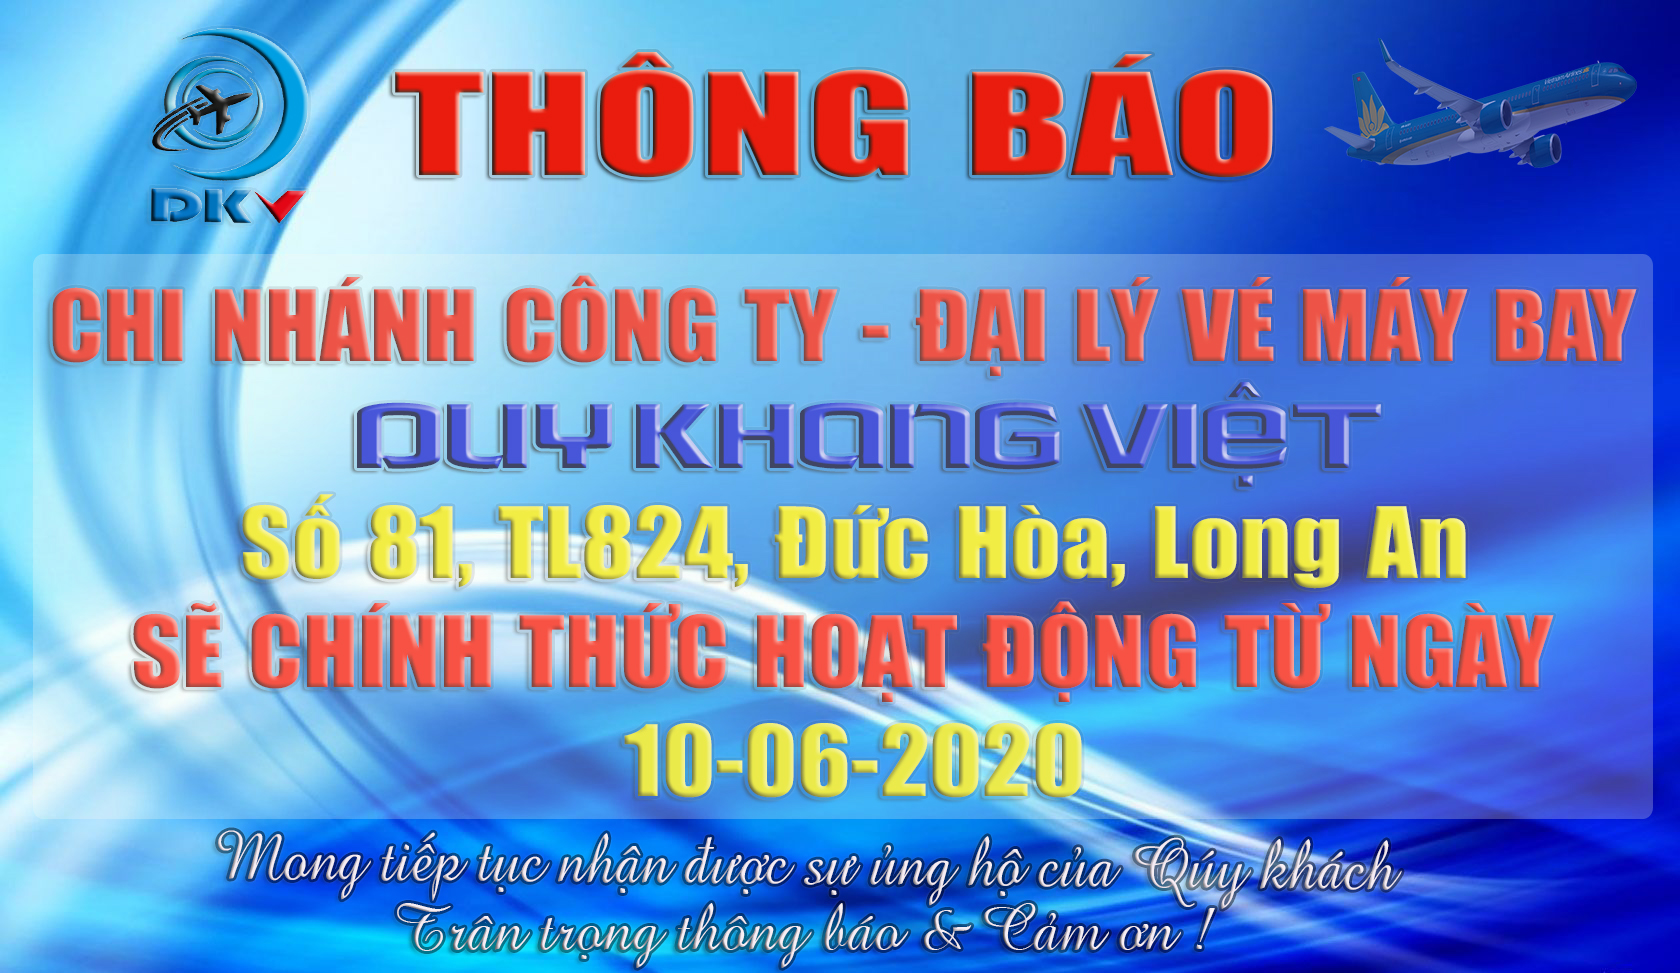 THONG_BAO_KHAI_TRUONG_CN_DUC_HOA